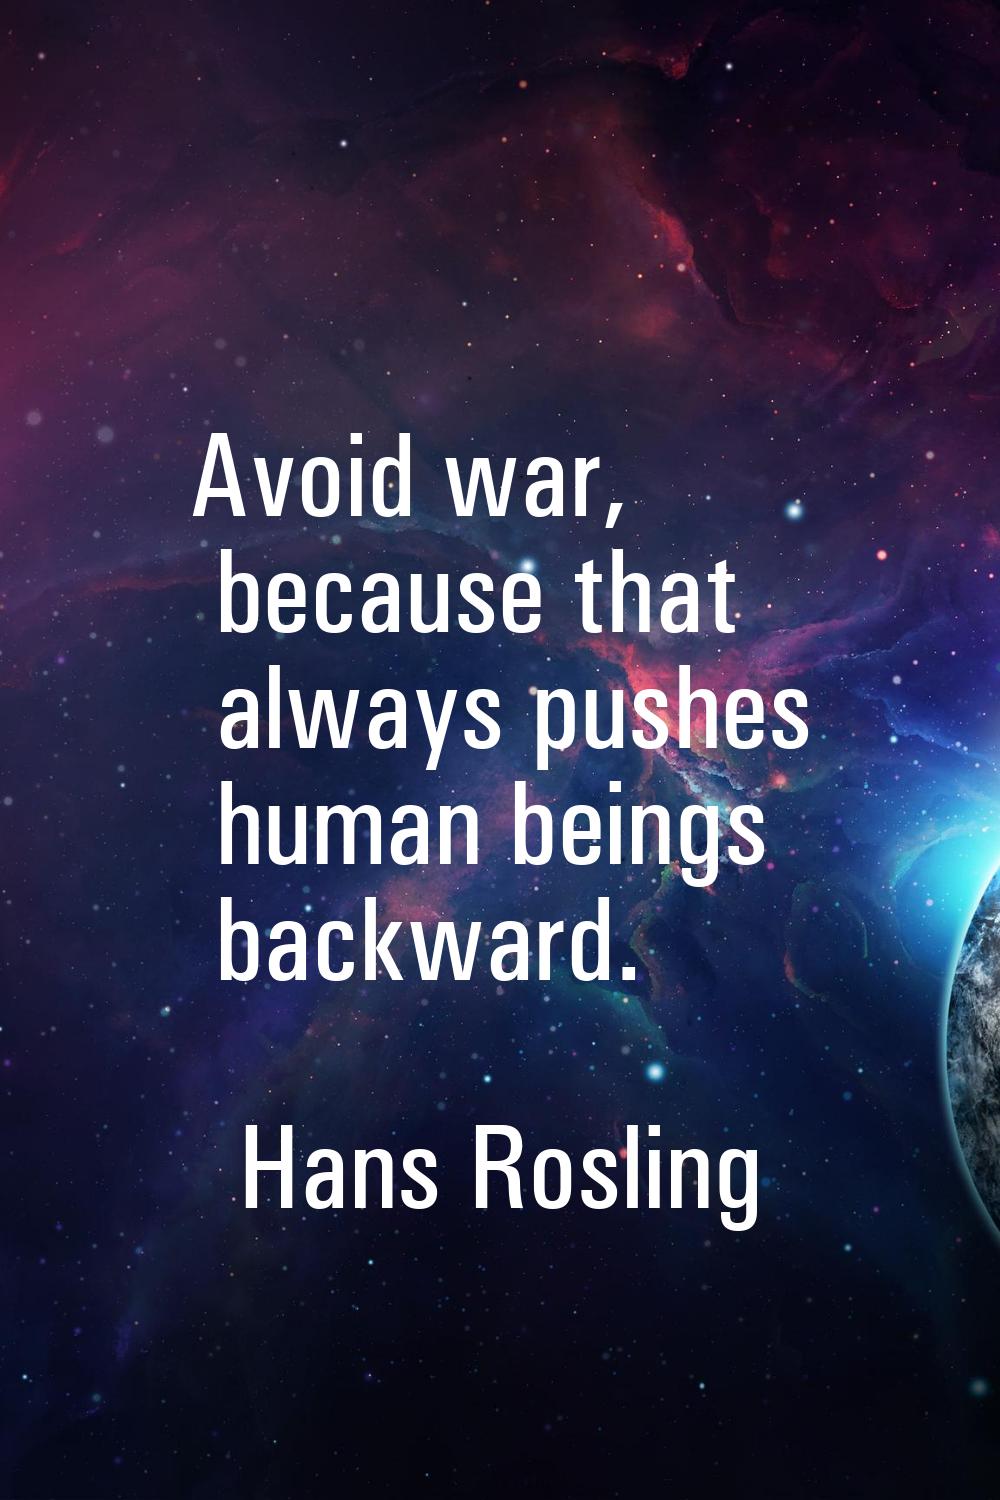 Avoid war, because that always pushes human beings backward.